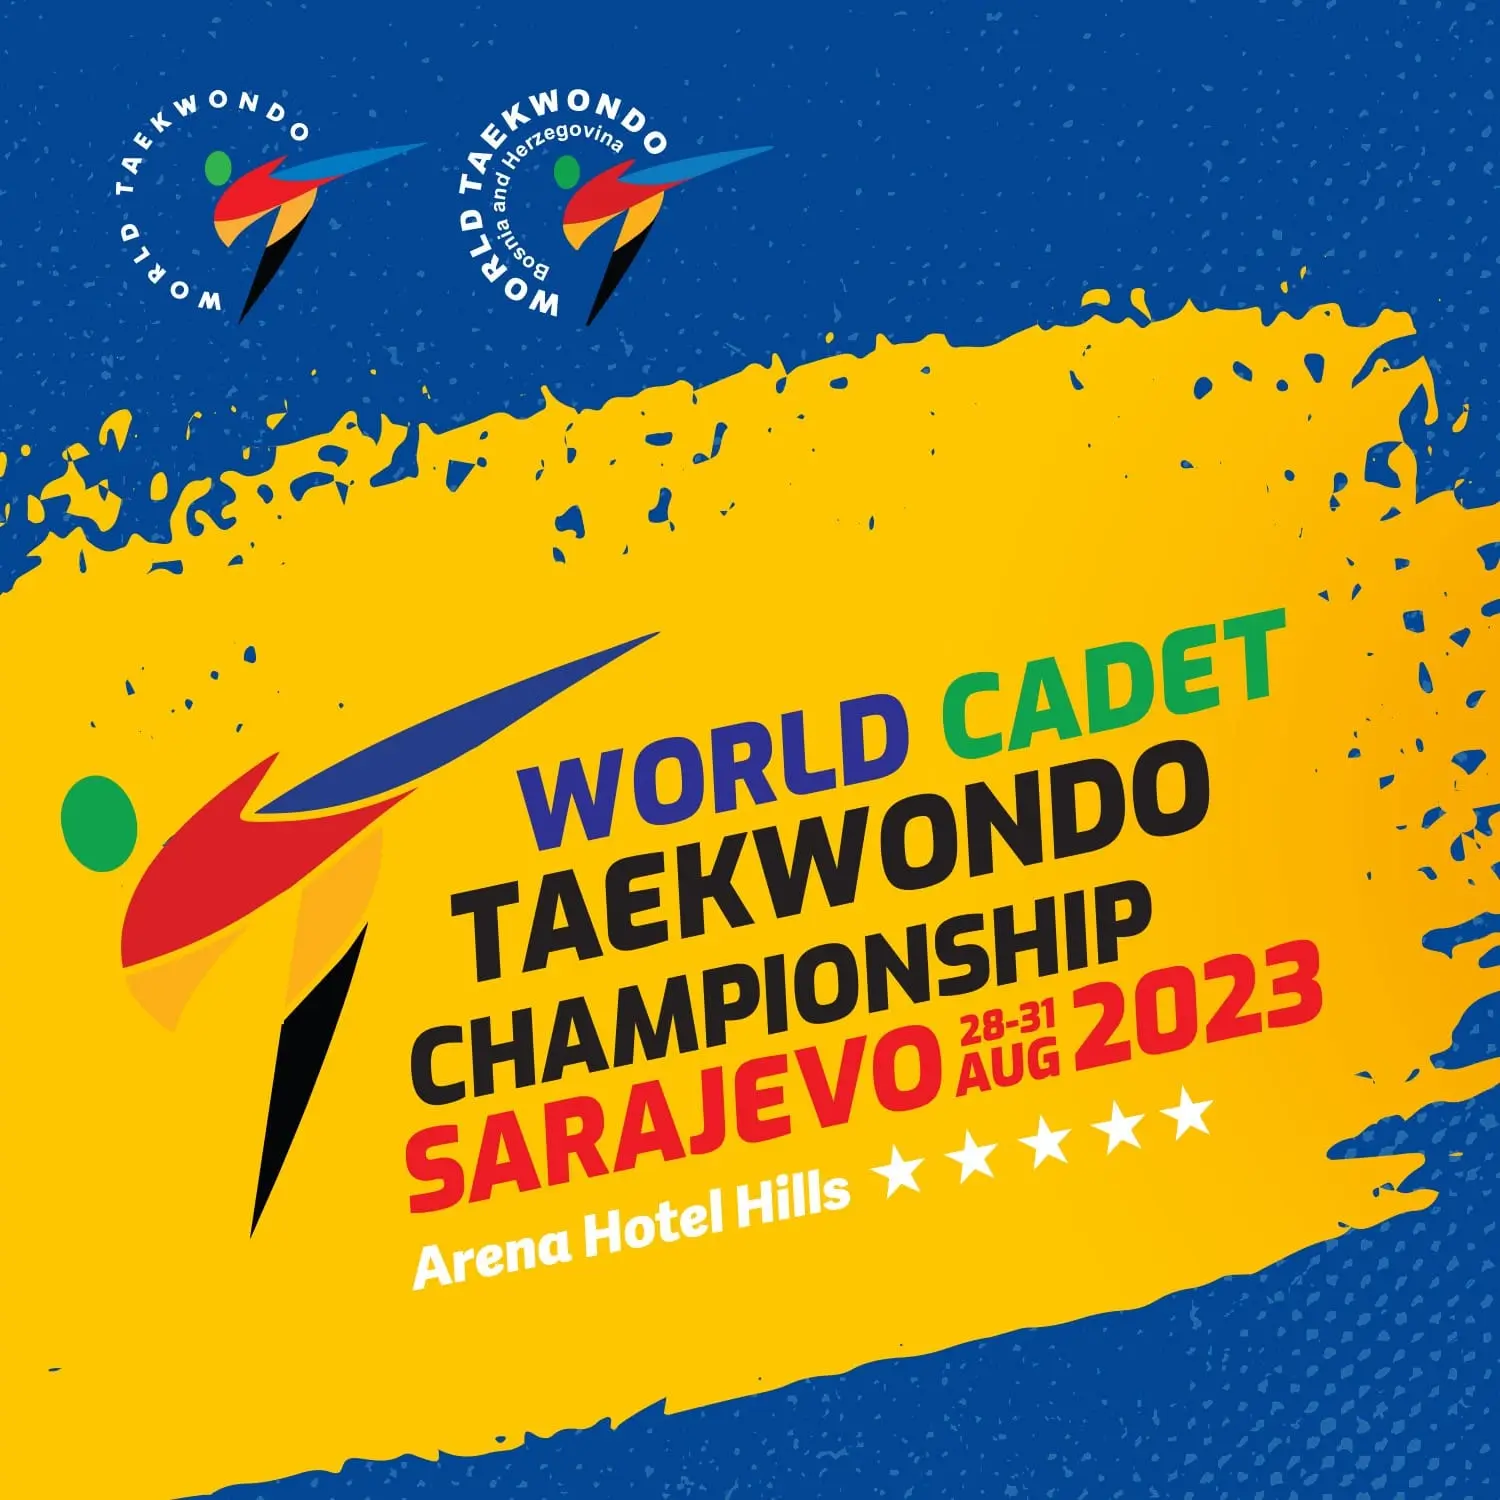 Sarajevo 2023 World Taekwondo Cadet Championships - Official Poster